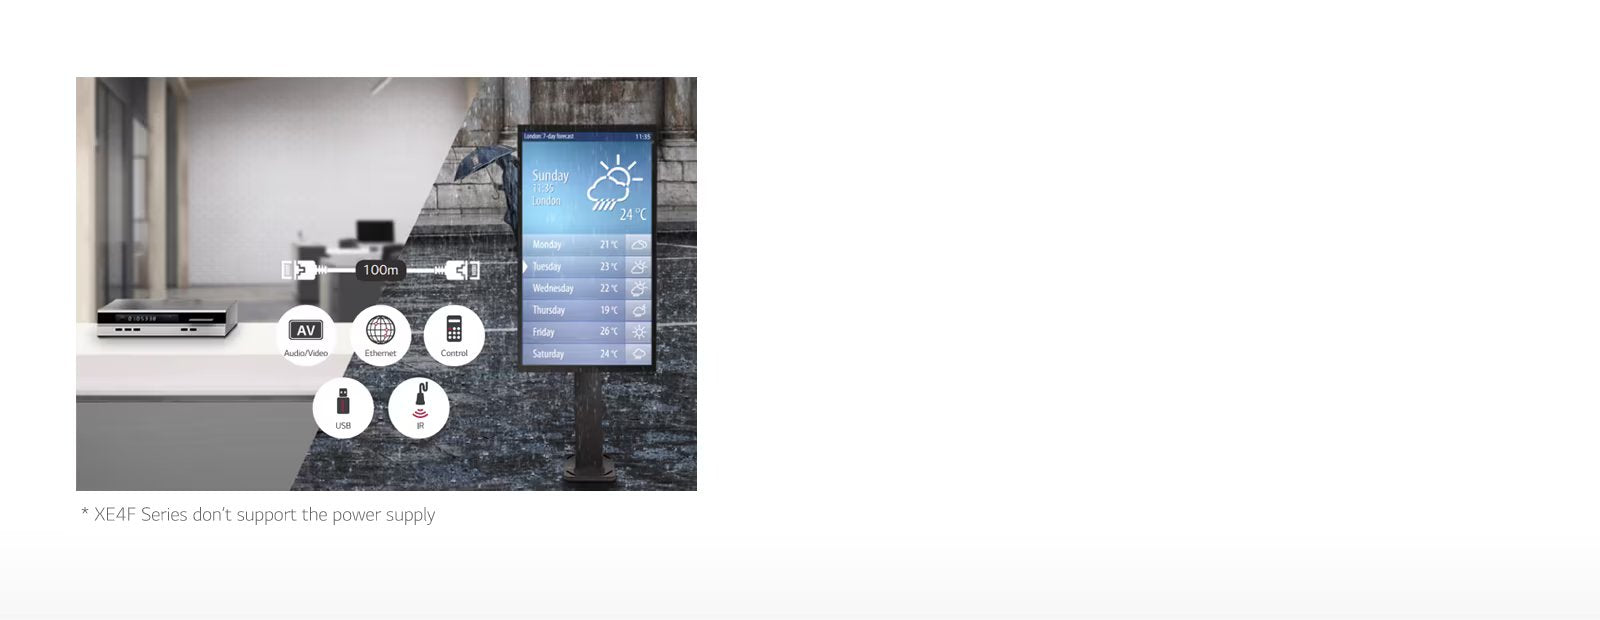 LG 49XE4F 49" Waterproof Outdoor Digital Signage Display